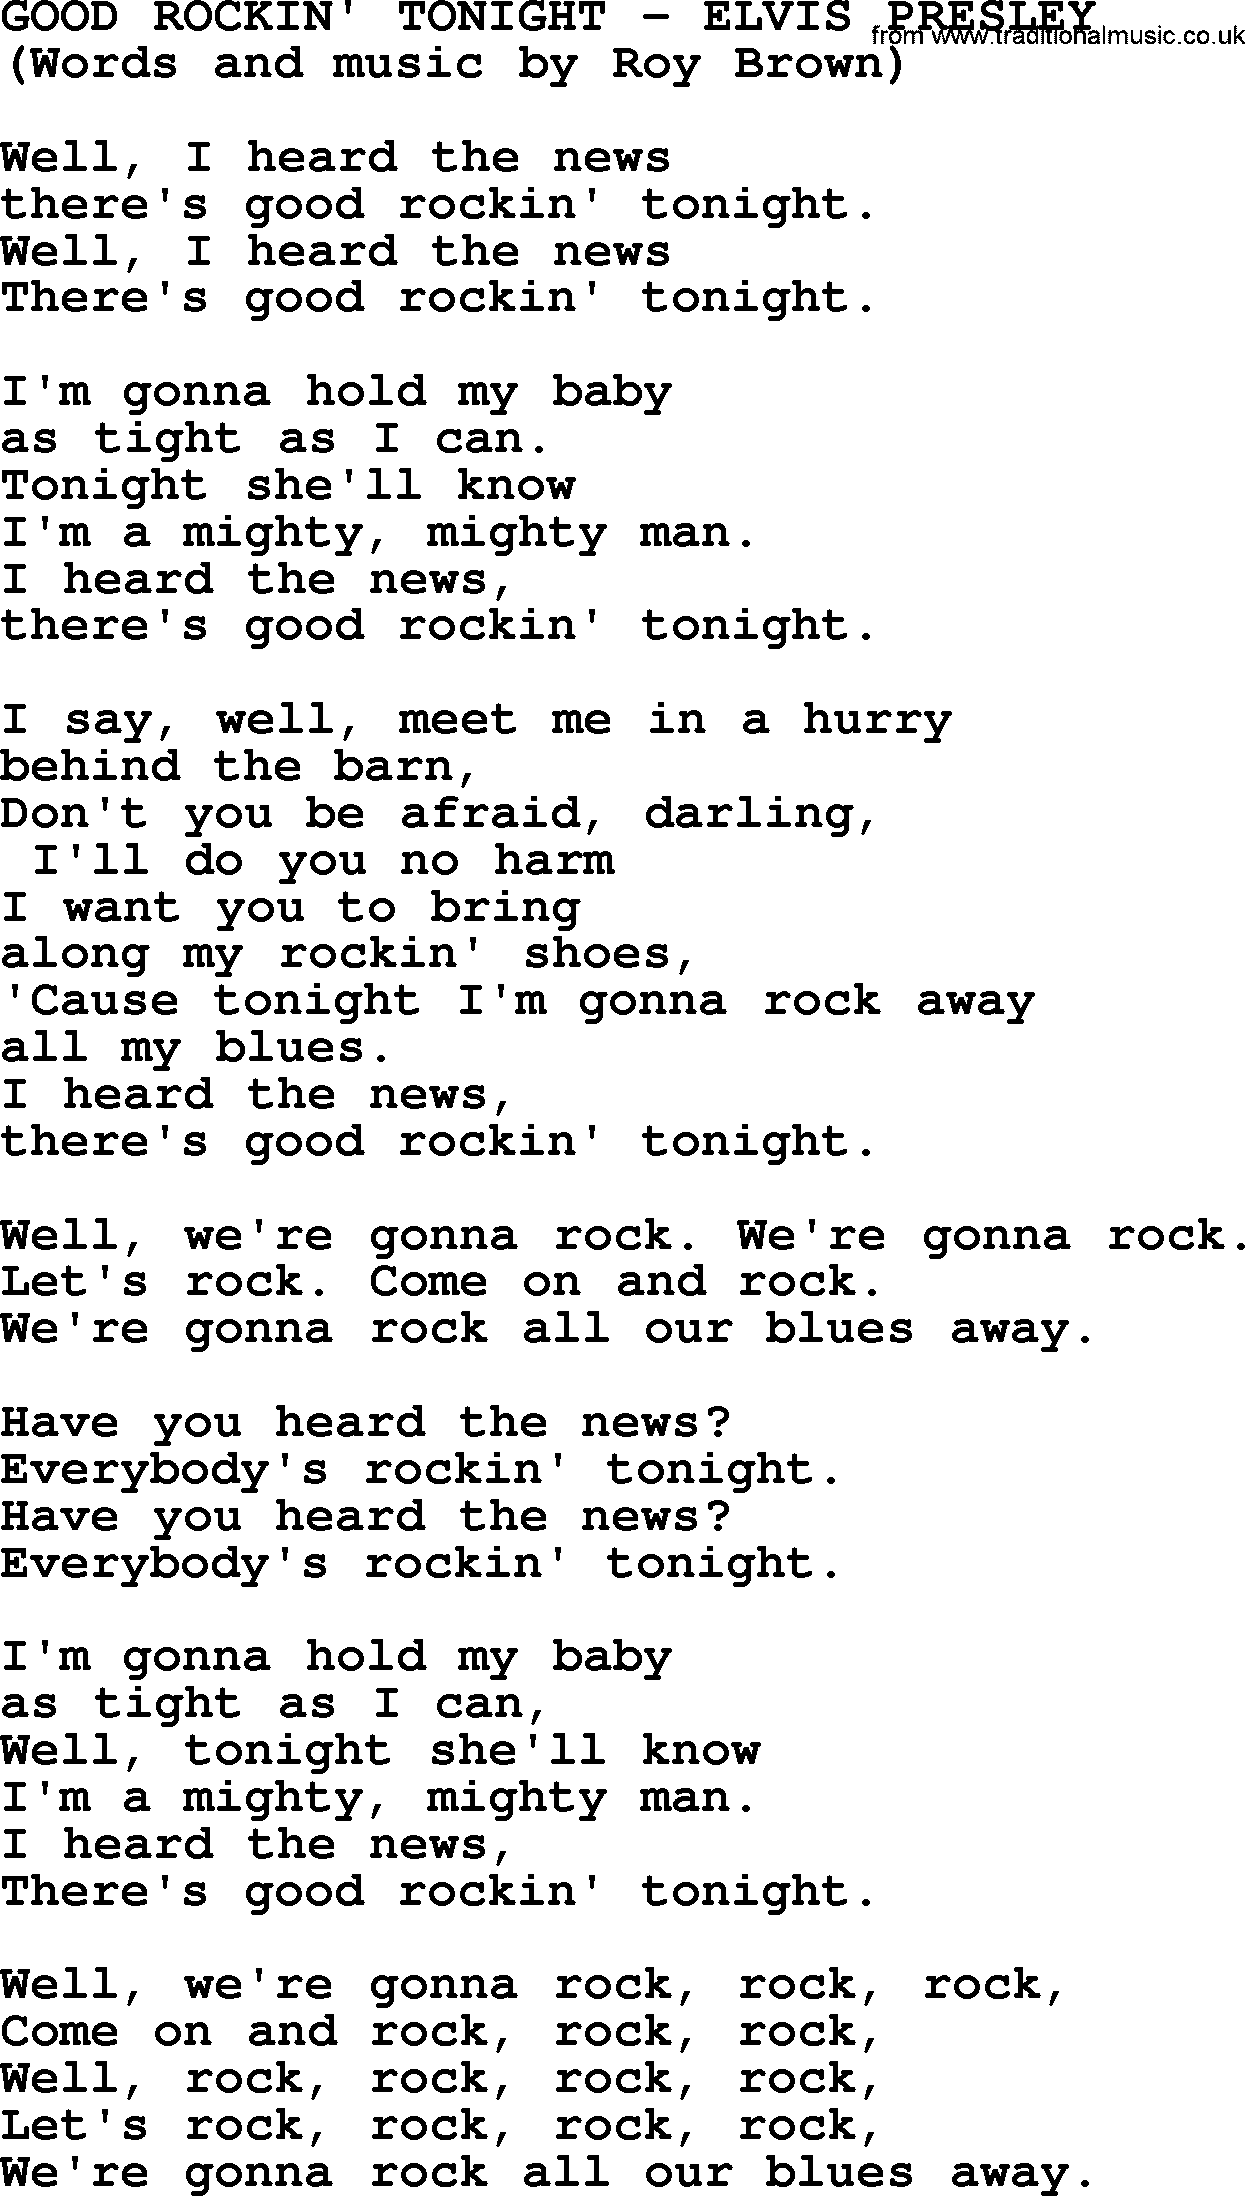 Elvis Presley song: Good Rockin' Tonight lyrics